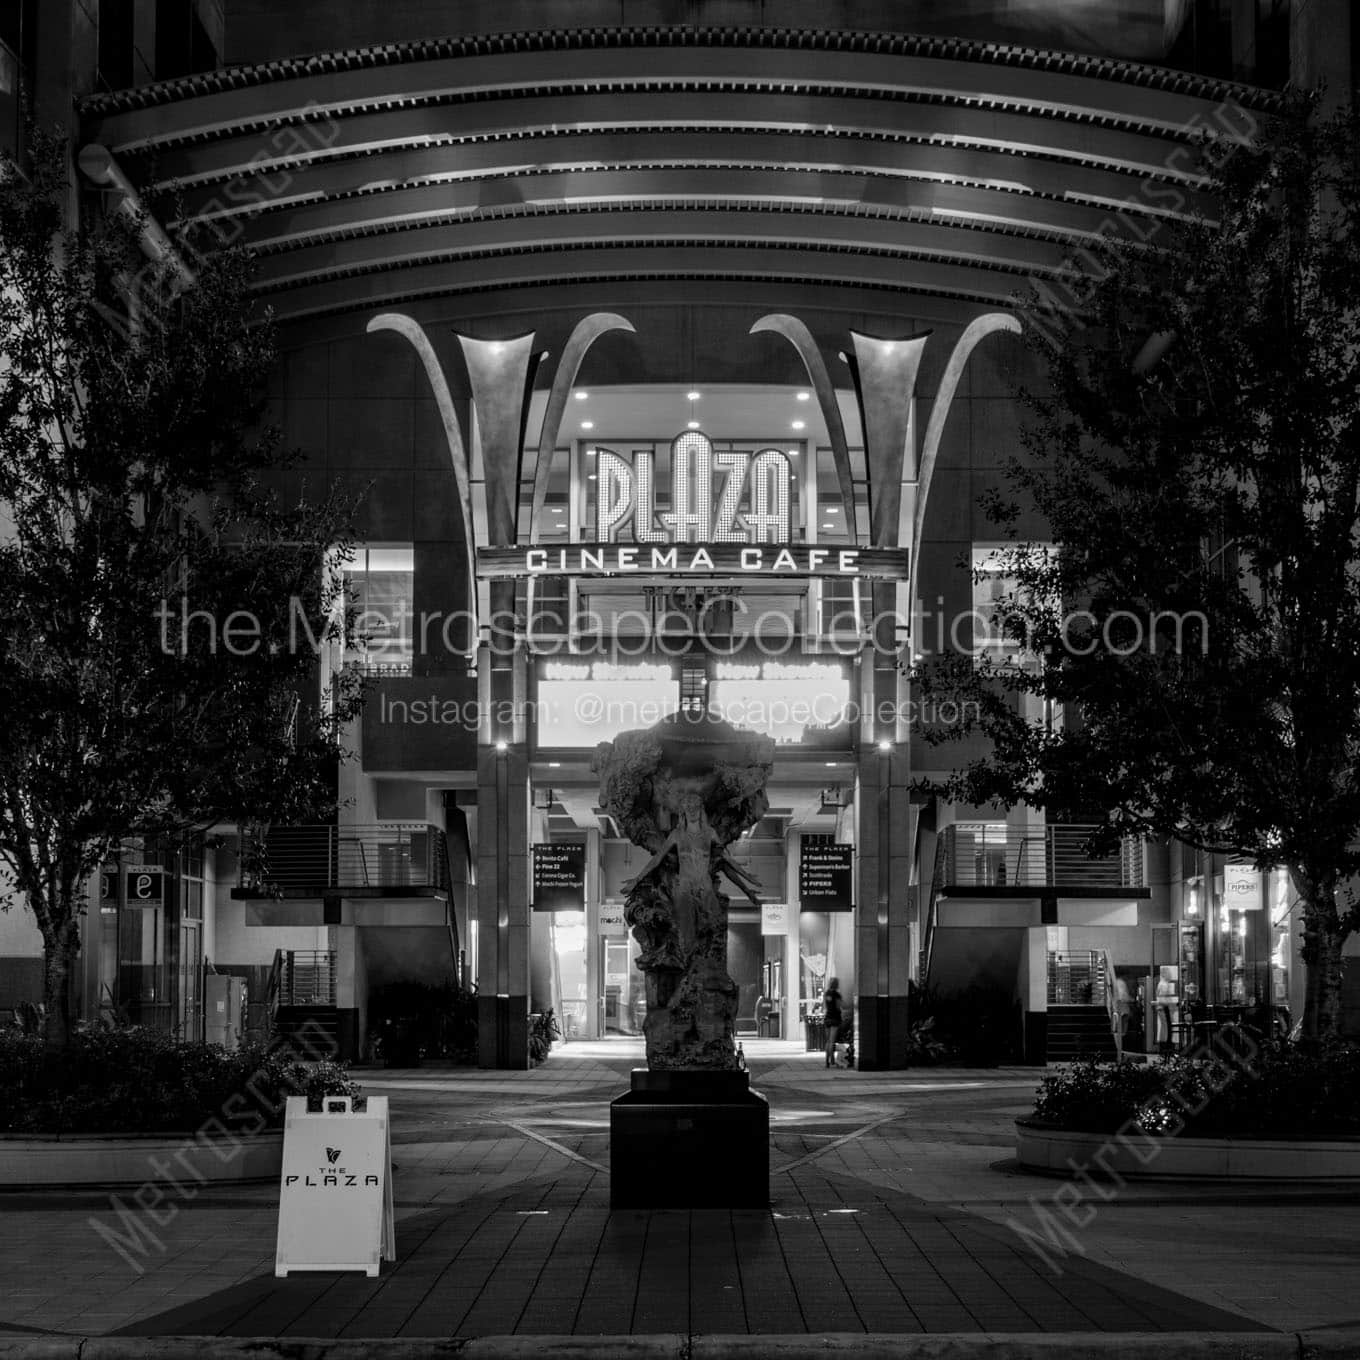 plaza cinema cafe at night Black & White Wall Art